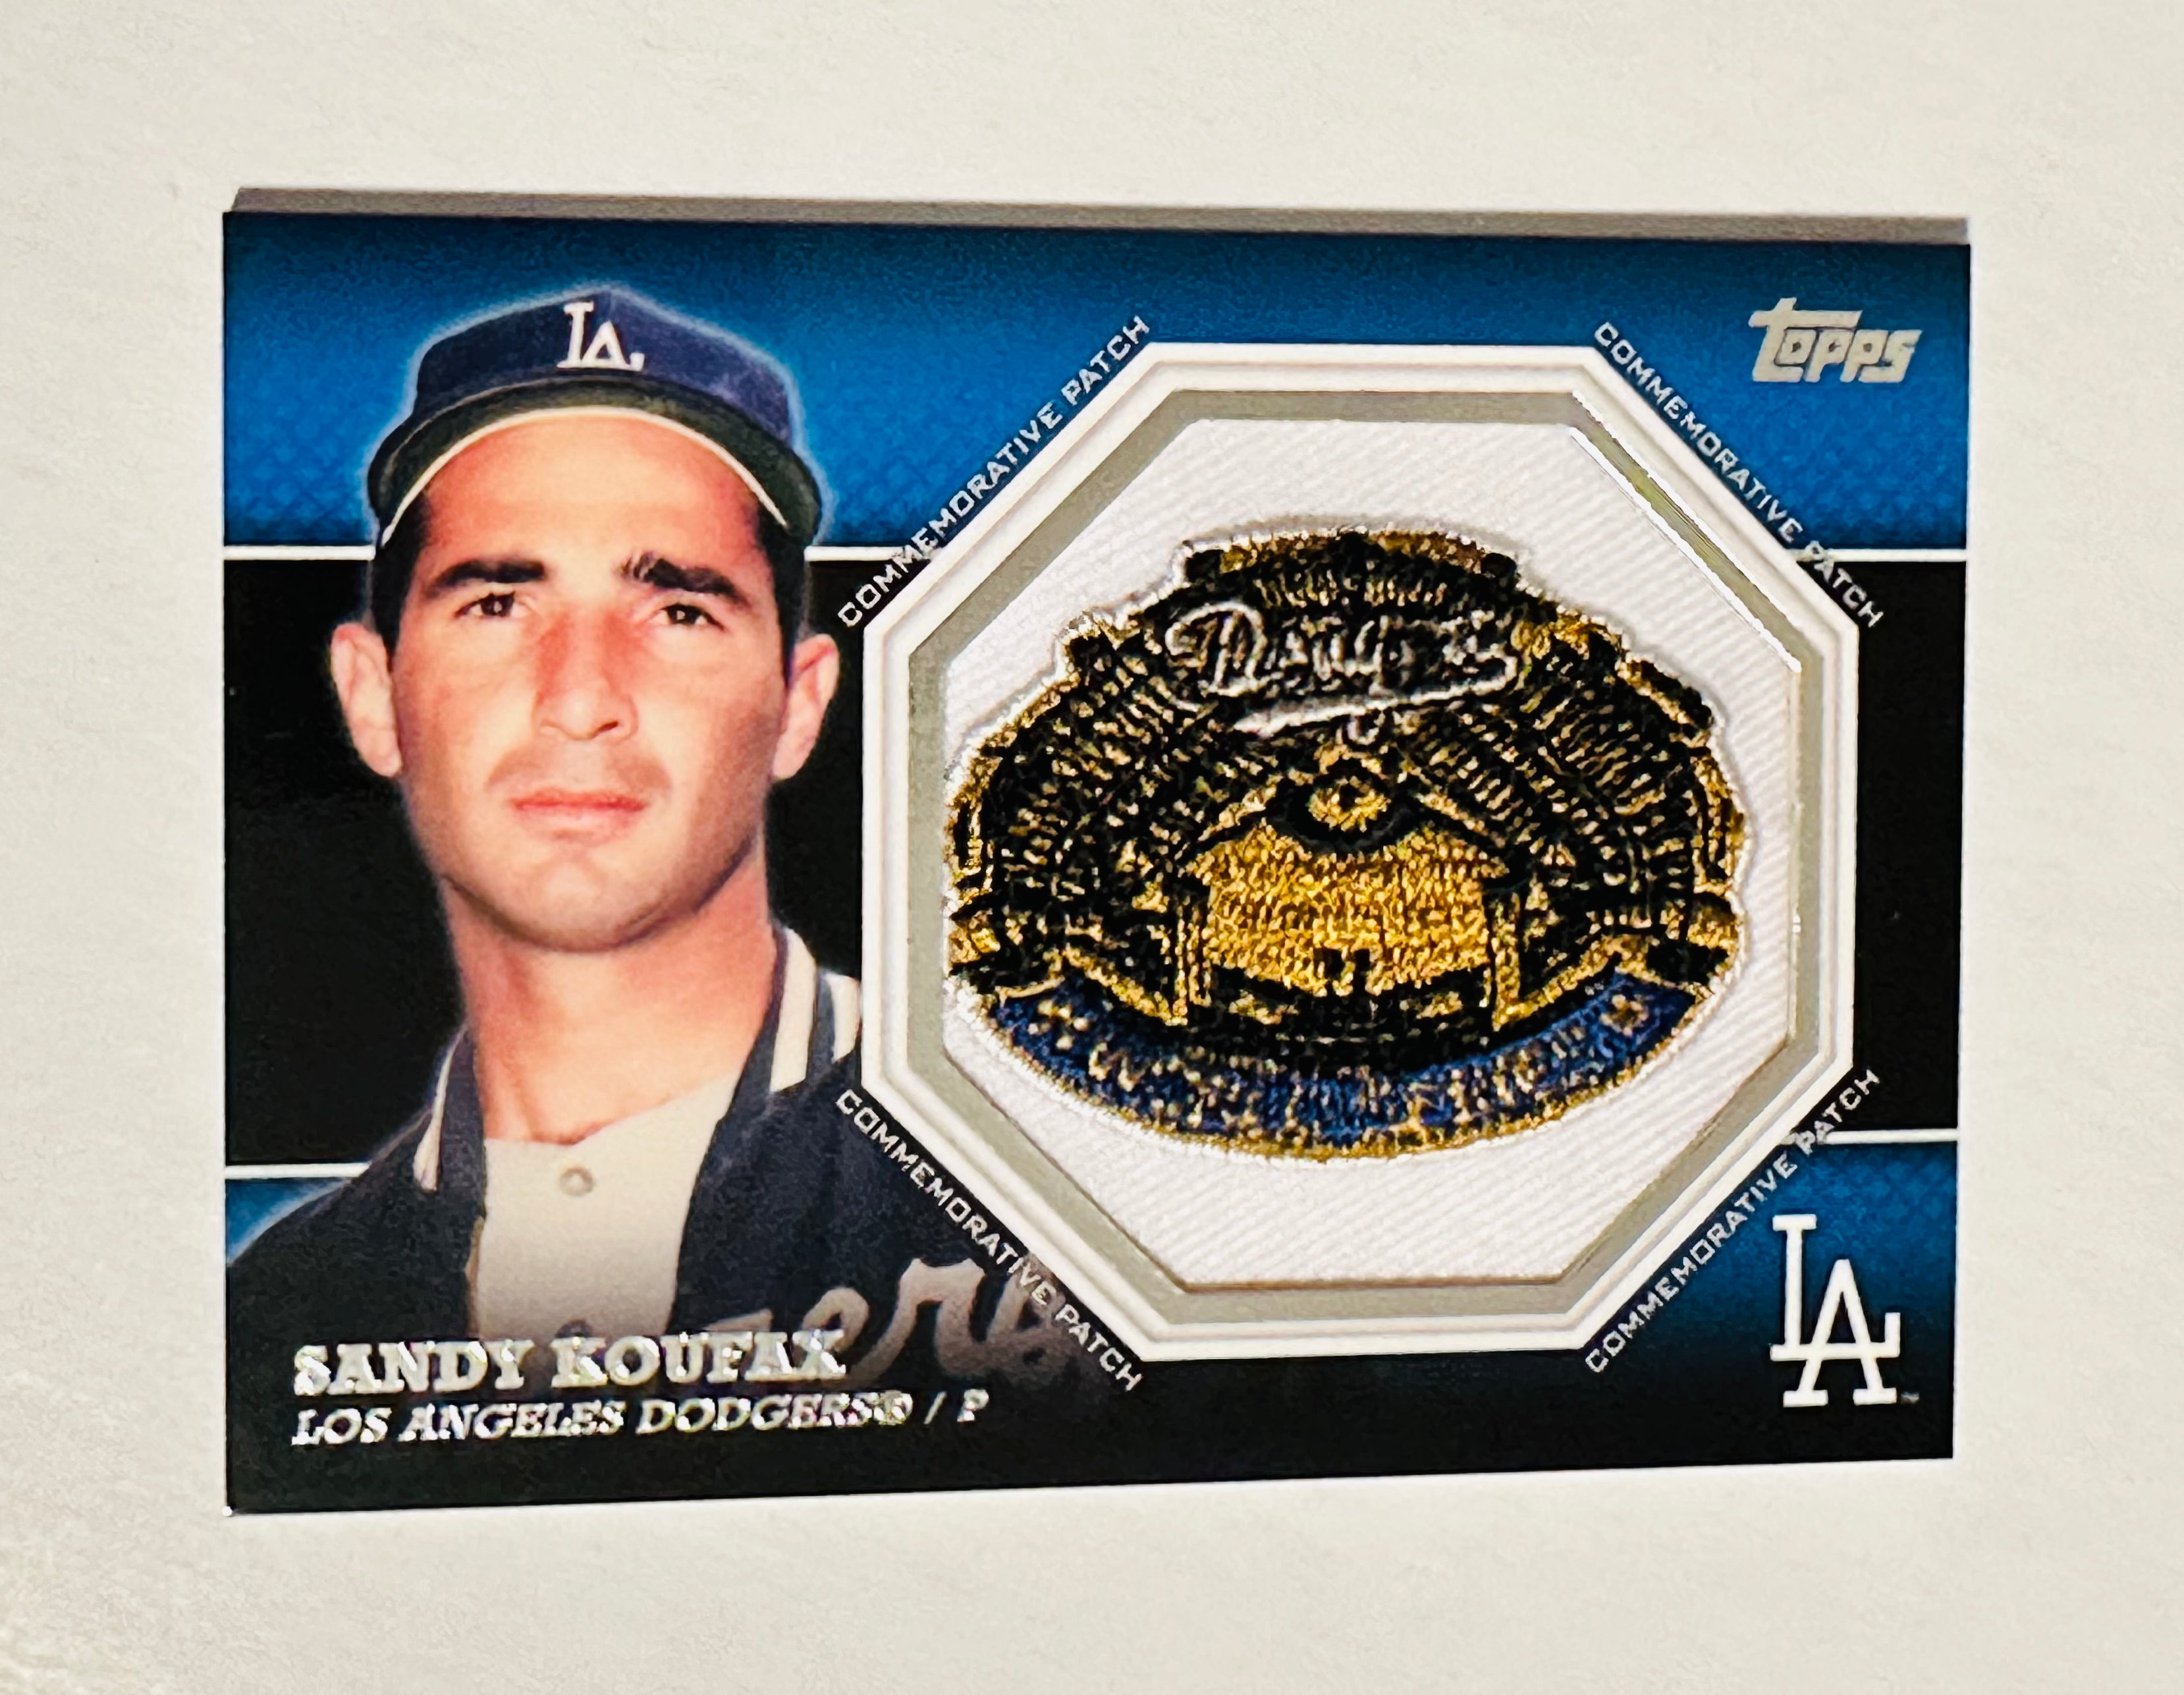 Sandy Koufax, Los Angeles Dodgers, rare commemorative, patch baseball insert card